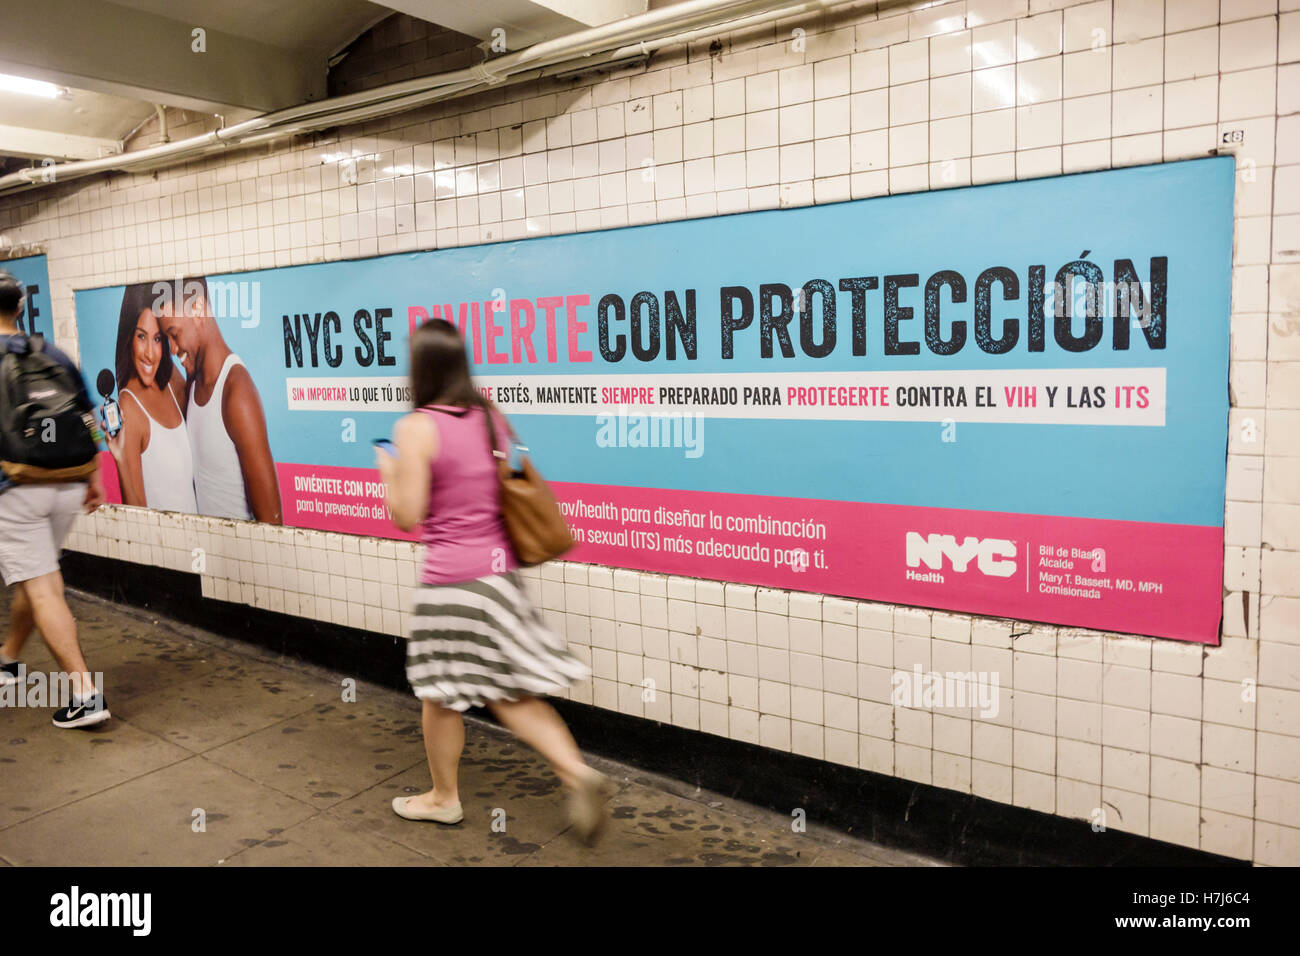 New York City,NY NYC Lower Manhattan,West Village,subway,MTA,Christopher Street-Sheridan Square,station,adult adults,woman female women,motion,walking Stock Photo